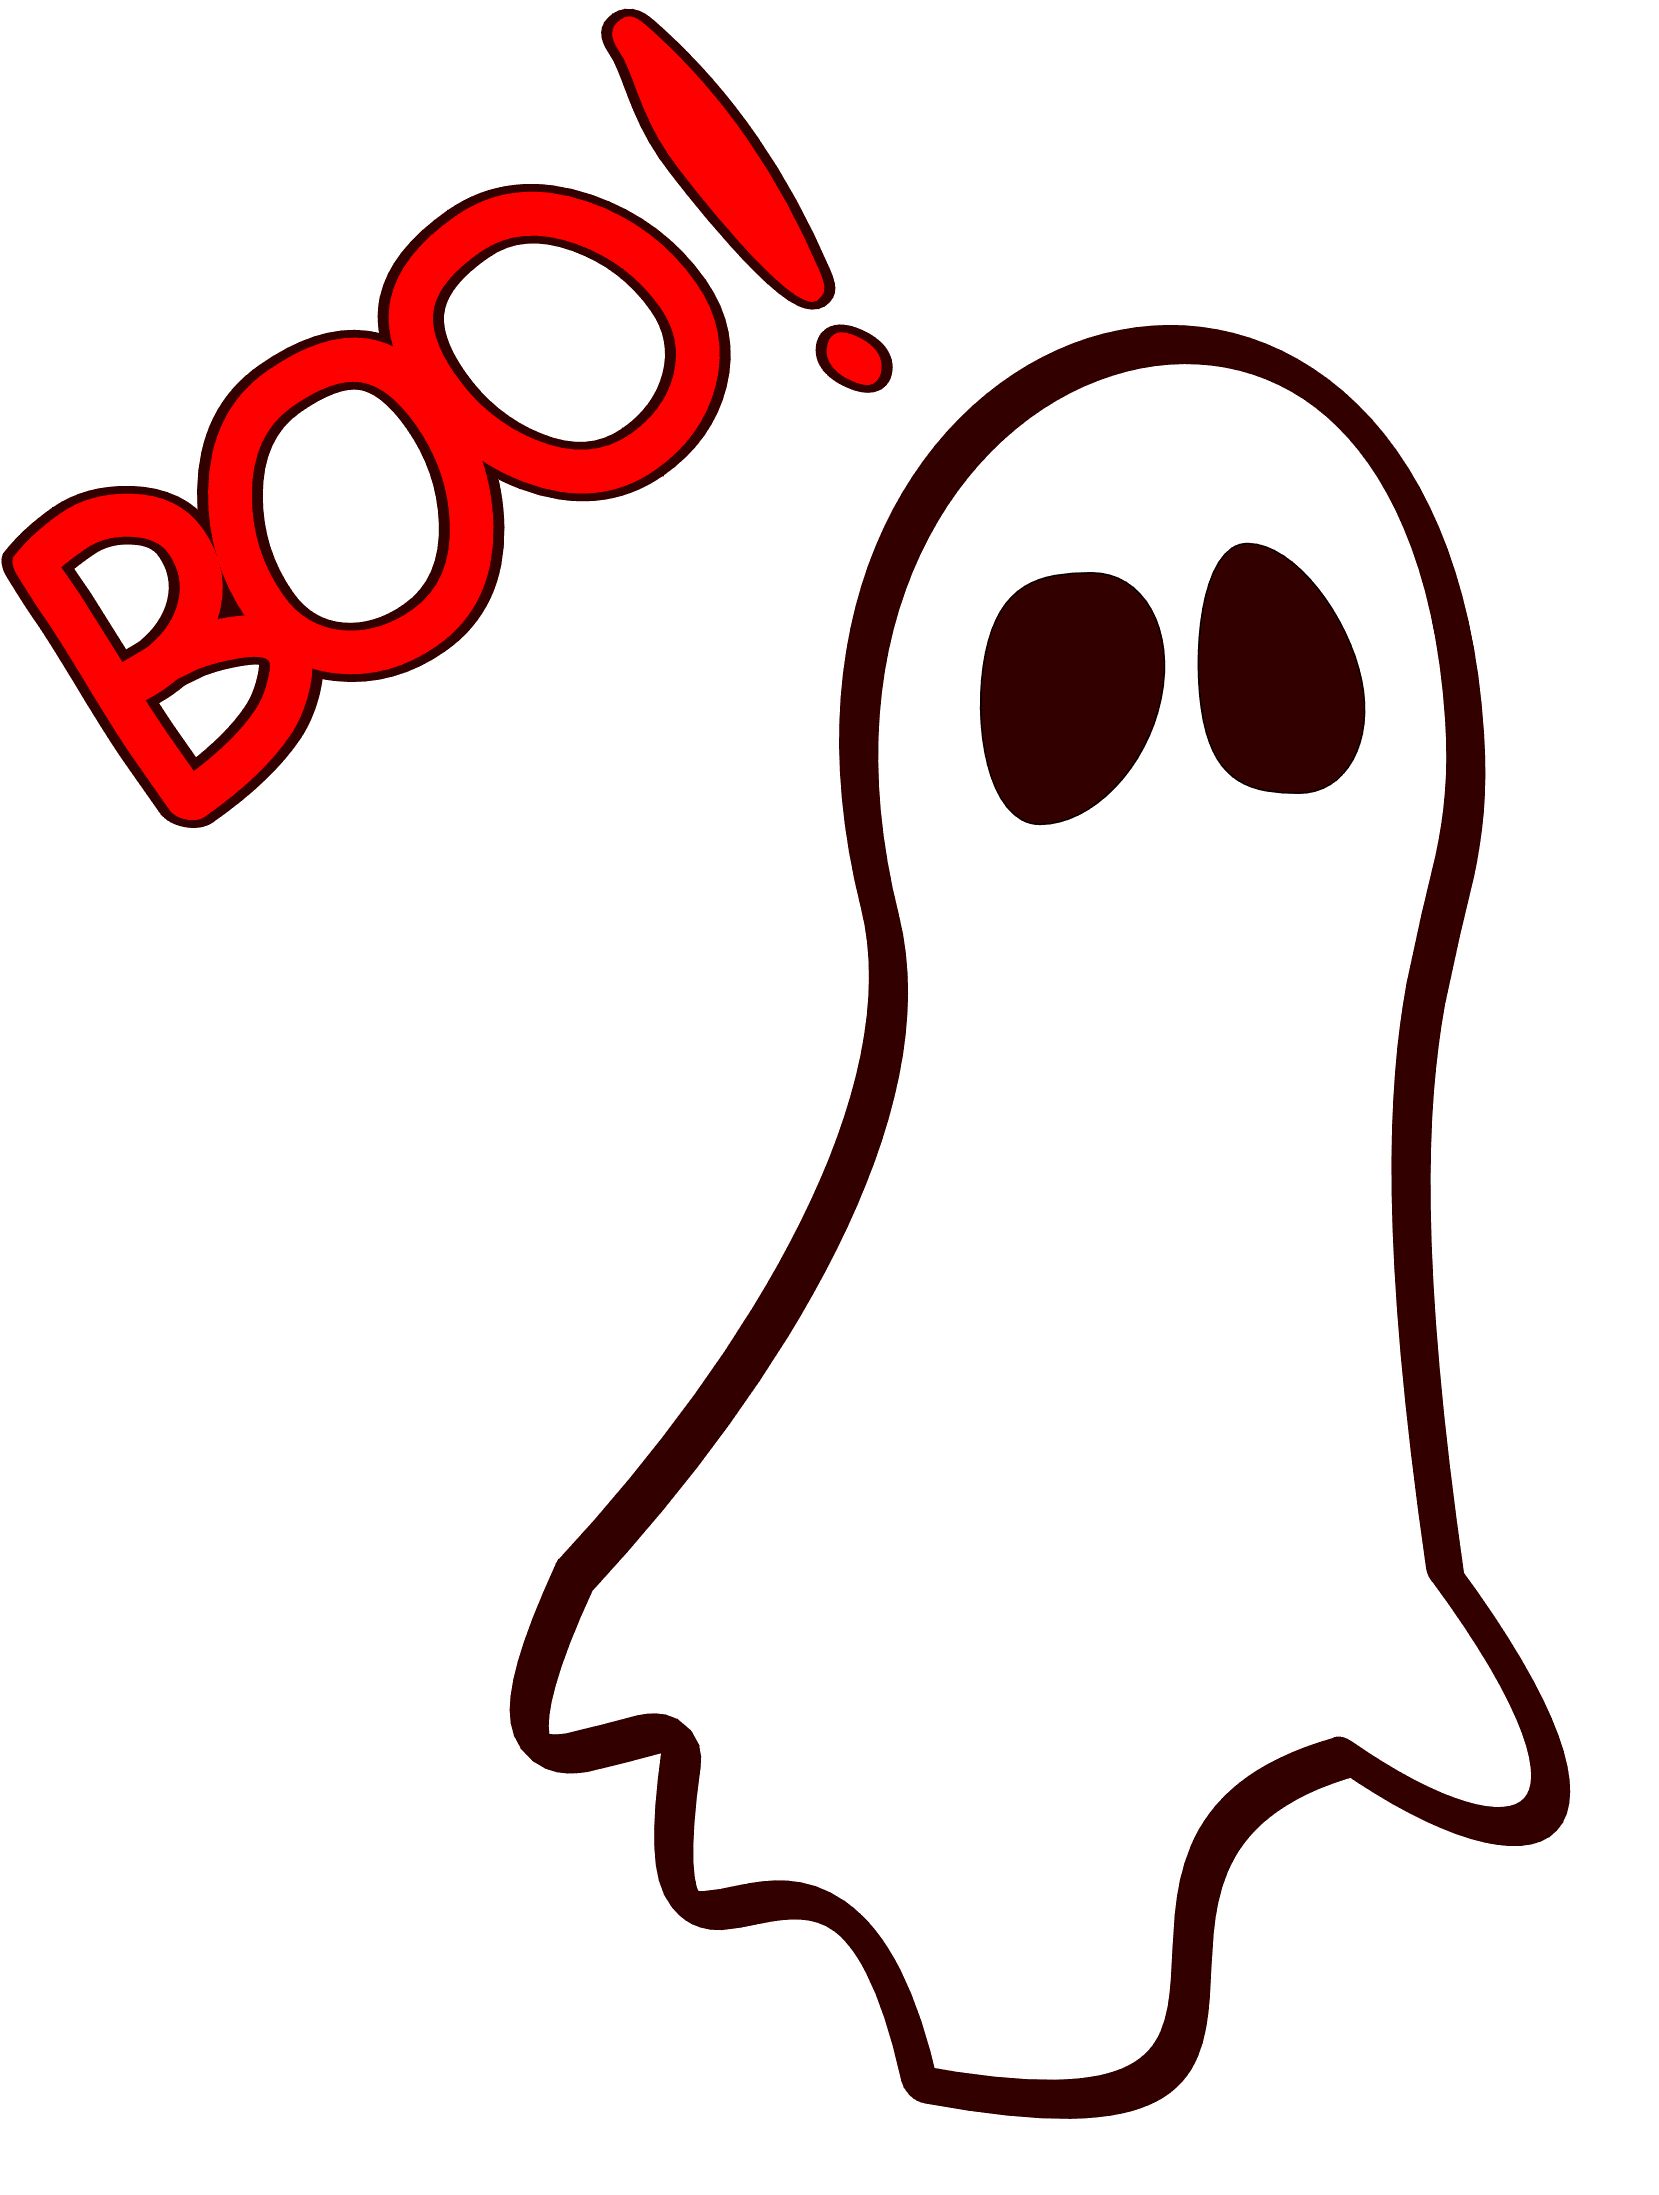 boo-ghost-clip-art-578410 .